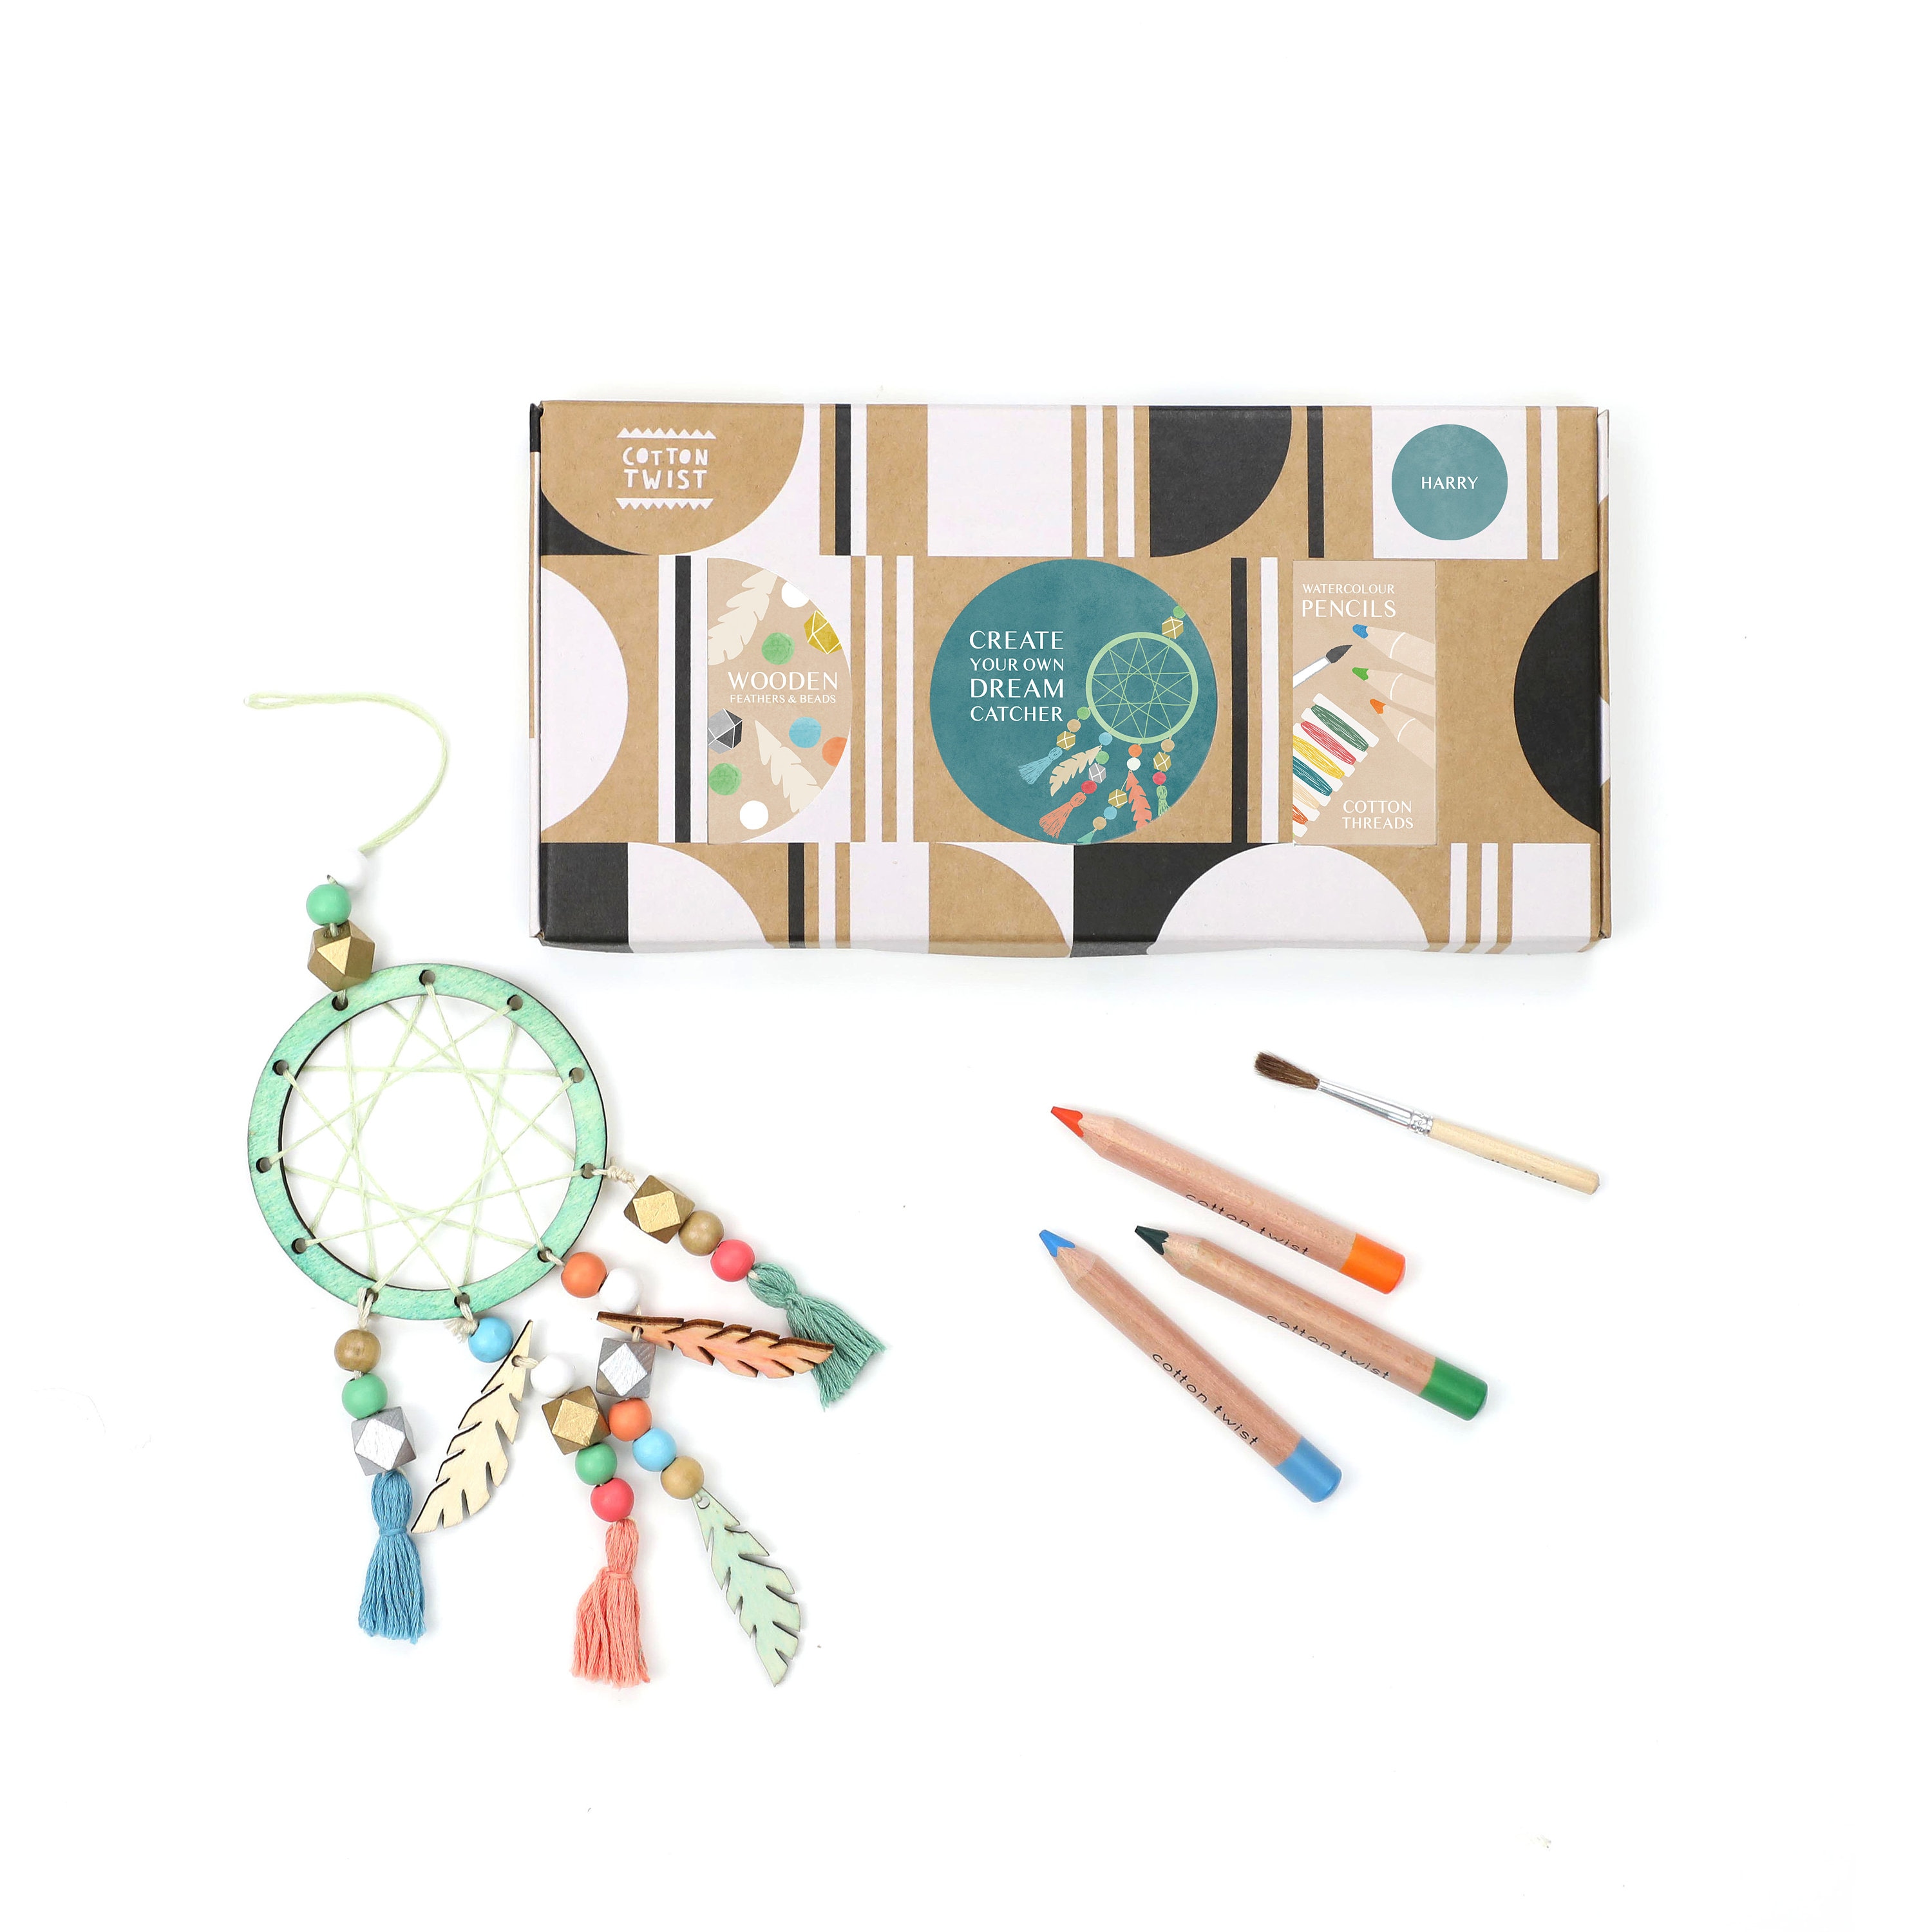 make your own dreamcatcher craft kit activity box - sustainable craft kit -  cotton twist